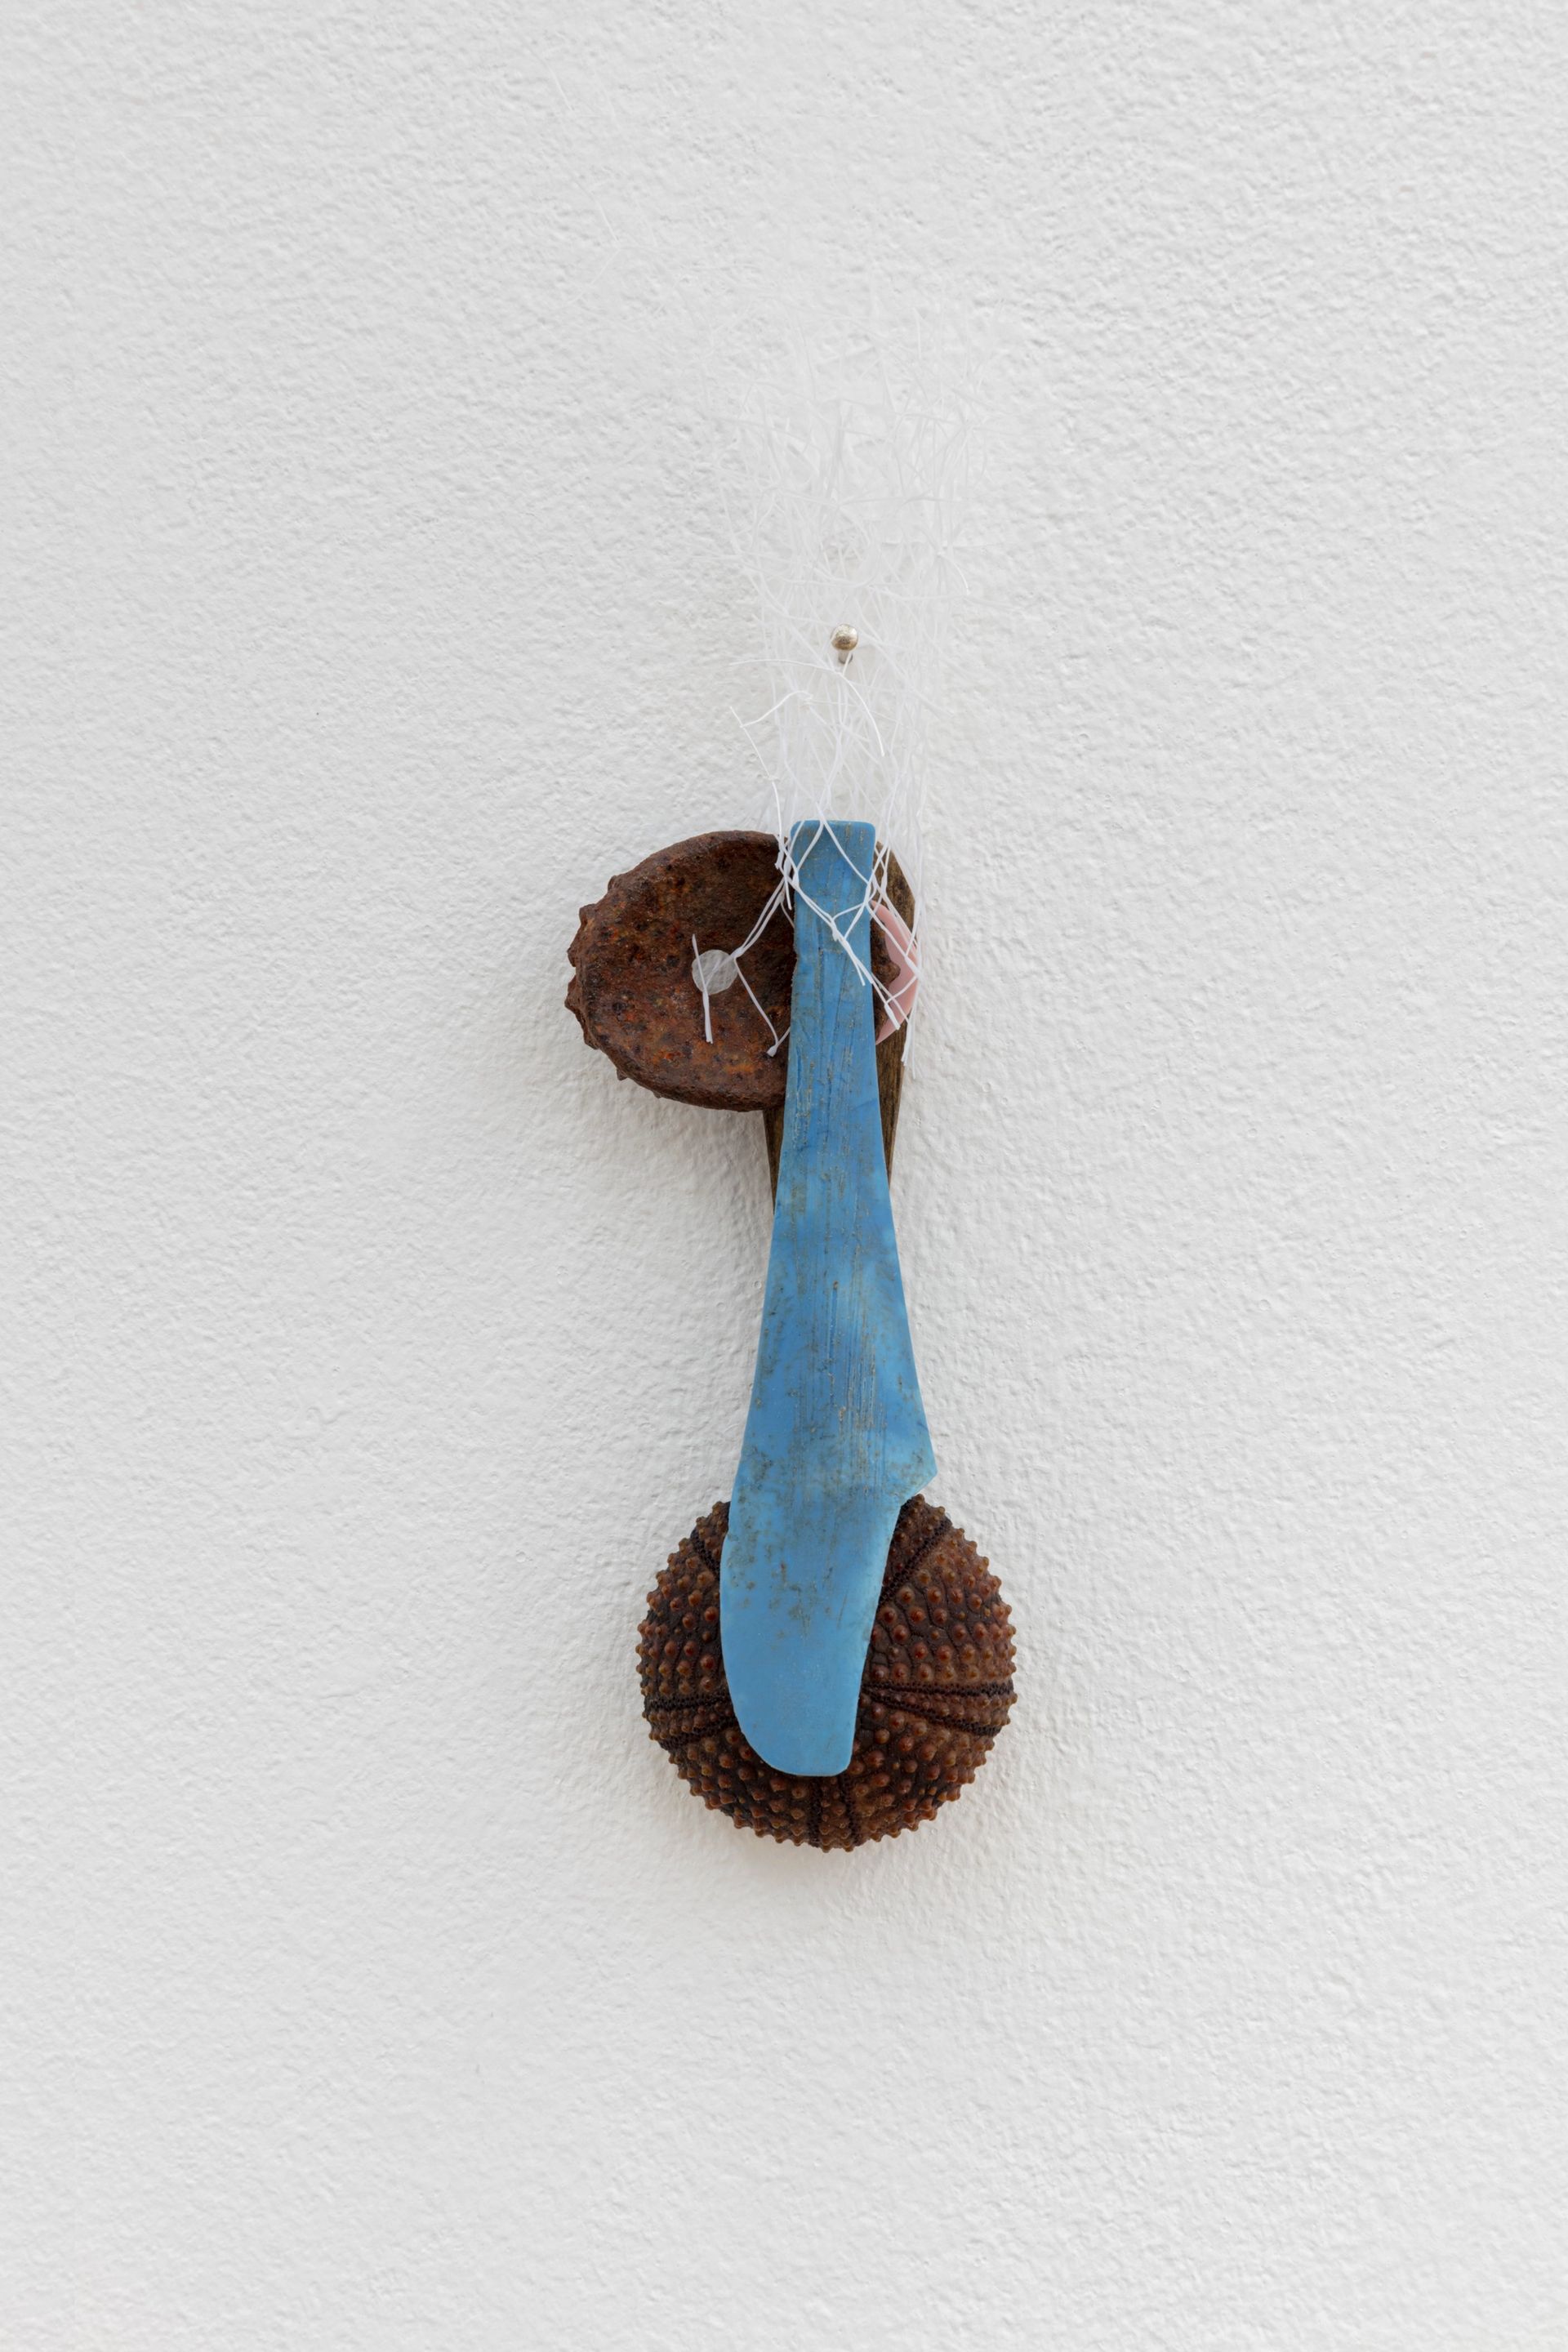 David Fesl, Untitled, 2022, soap sleeve, plastic spoon, popsicle stick, bottle cap, gummy seal, sea urchin shell, 15.4 × 4 × 2 cm, photo: Sebastian Kissel